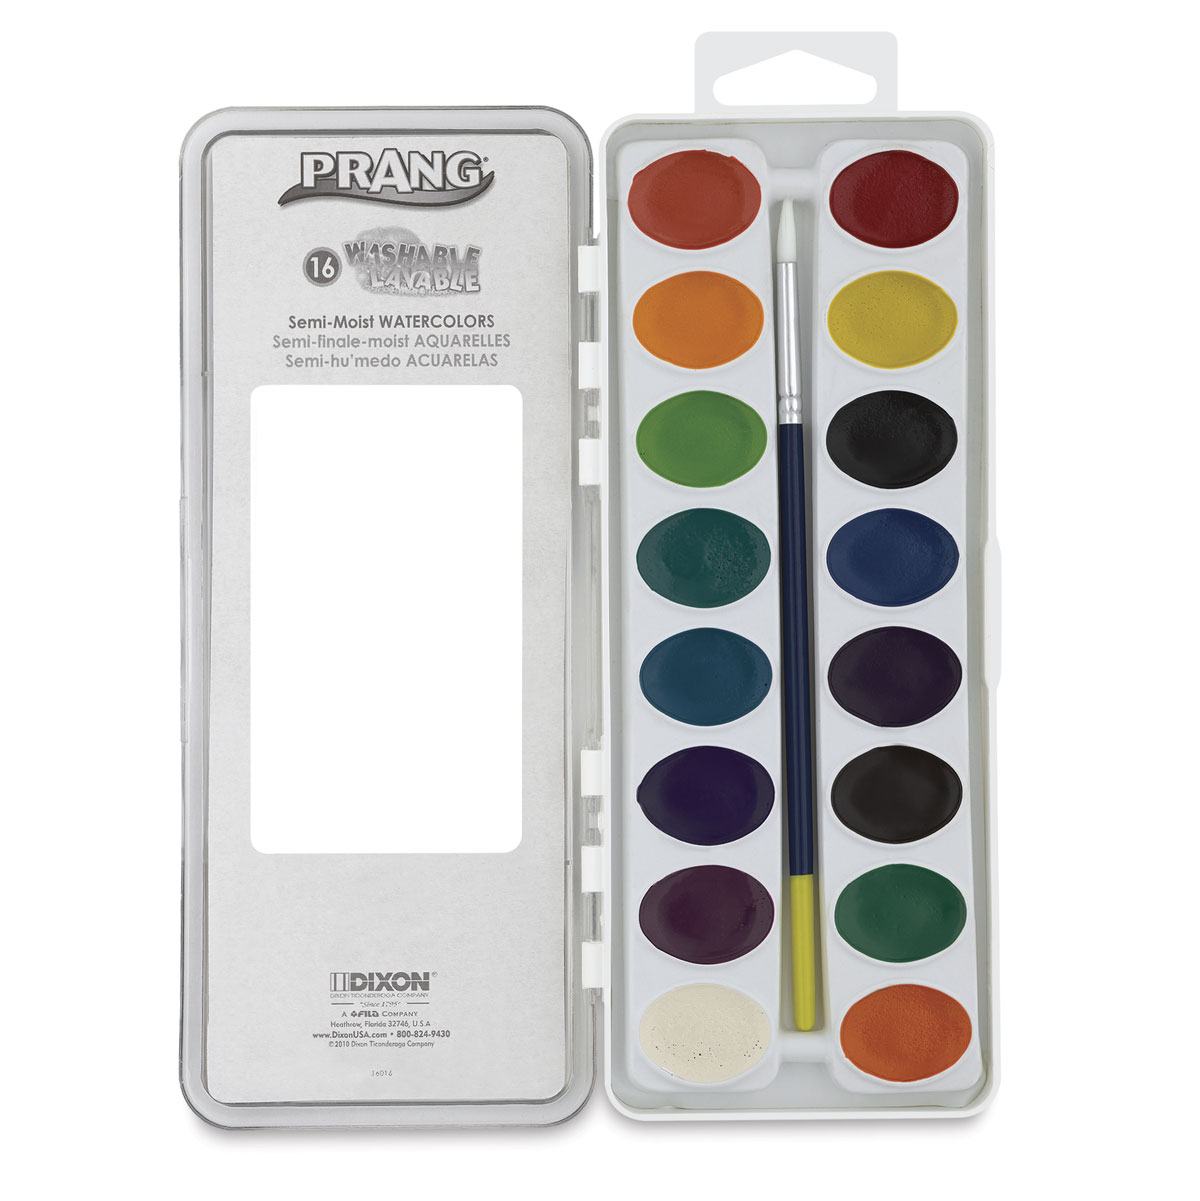 Dixon Ticonderoga Prang oval-16 Pan Watercolor Paint Set, 16 Assorted Colors, Refillable, Includes Brush / 2 Pack